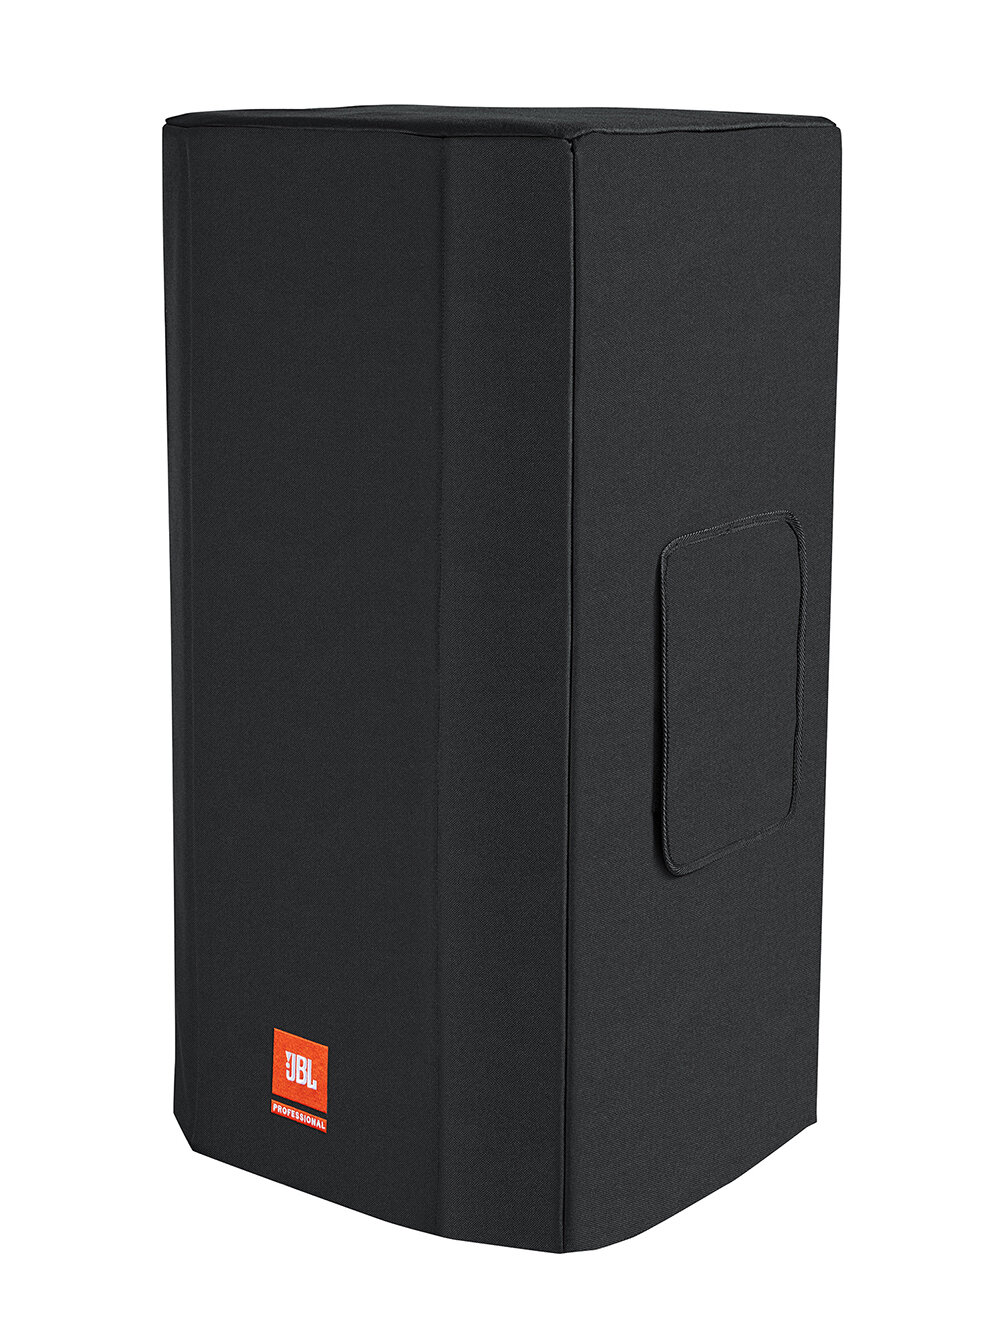 JBL BAGS Deluxe Padded Protective Cover for SRX835P Loudspeaker
#JBSRX835PCVR MFR #SRX835P-CVR-DLX